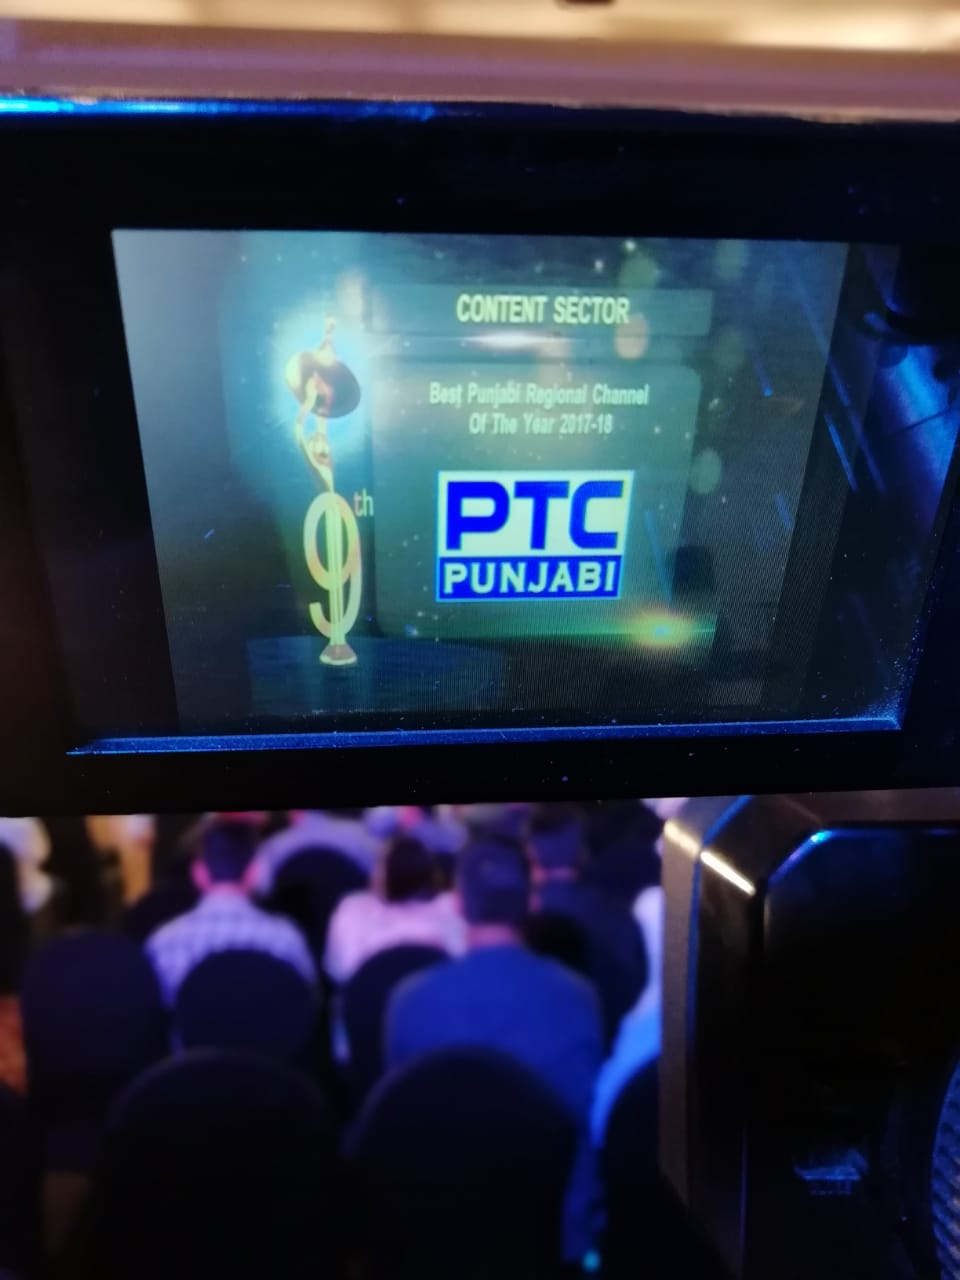 PTC Punjabi conferred with the Best Punjabi Regional Channel Award